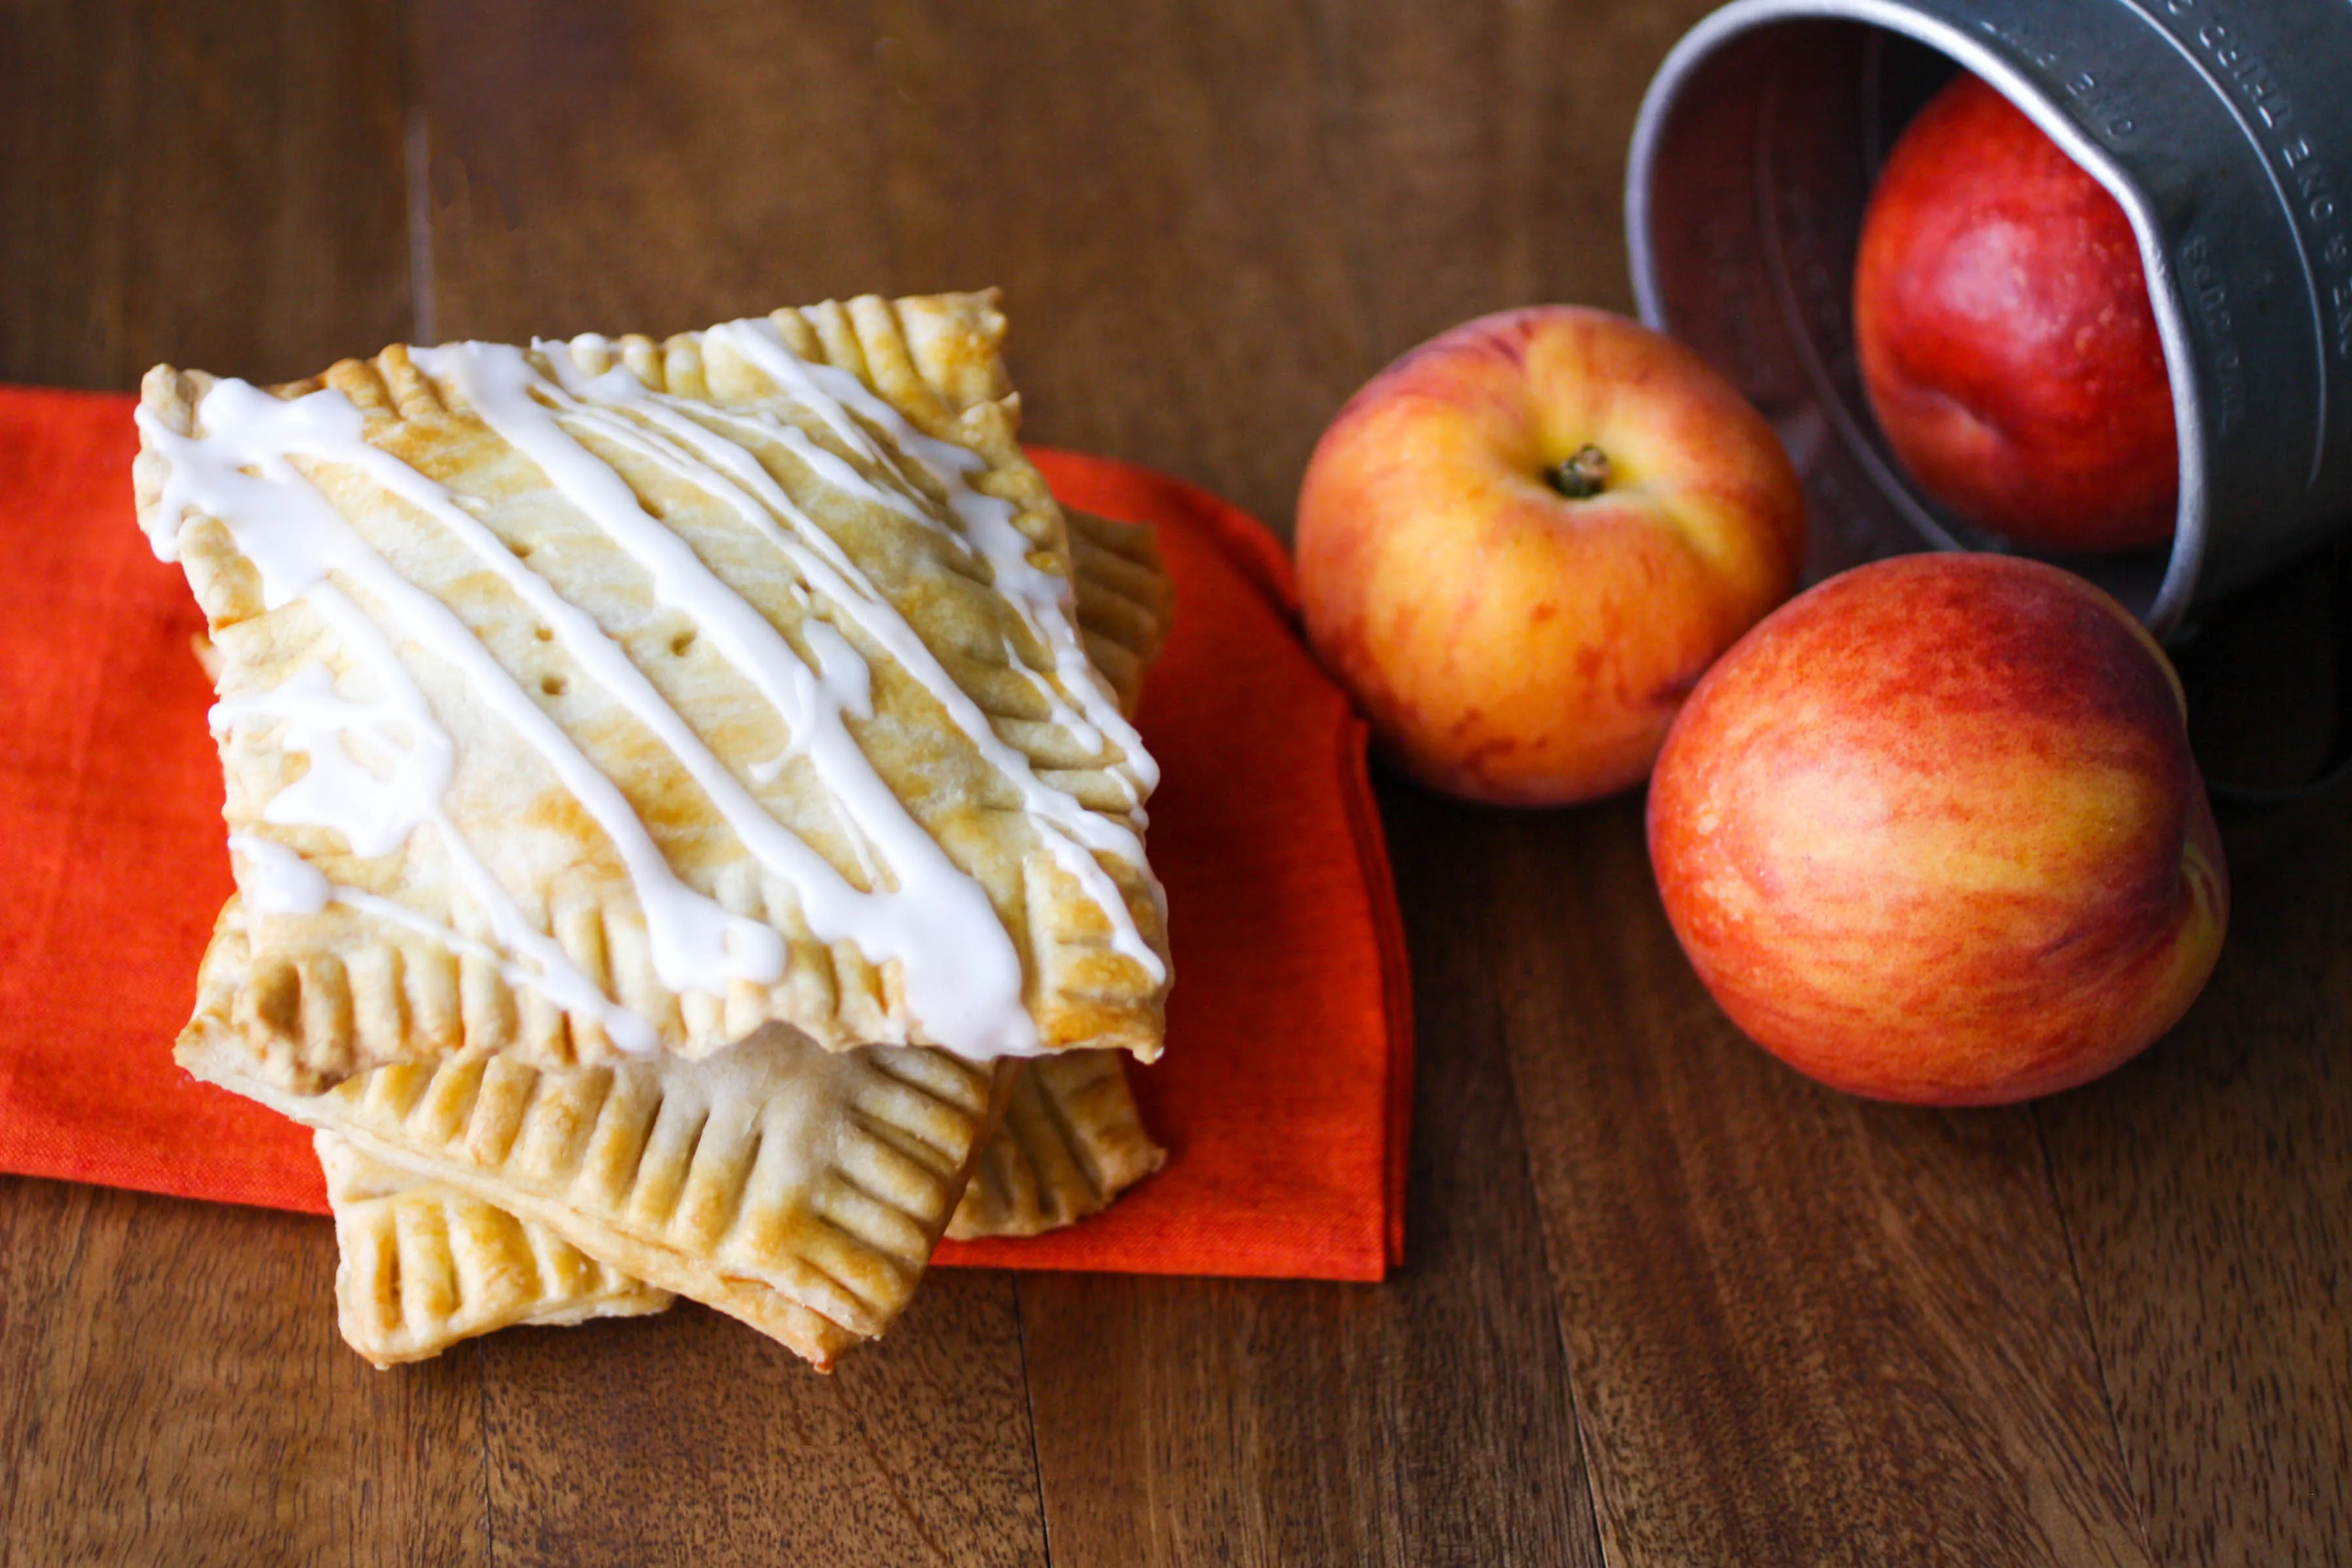 Fresh Peach Pie “Pop Tarts” are a wonderful treat. All those fresh peaches are amazing!